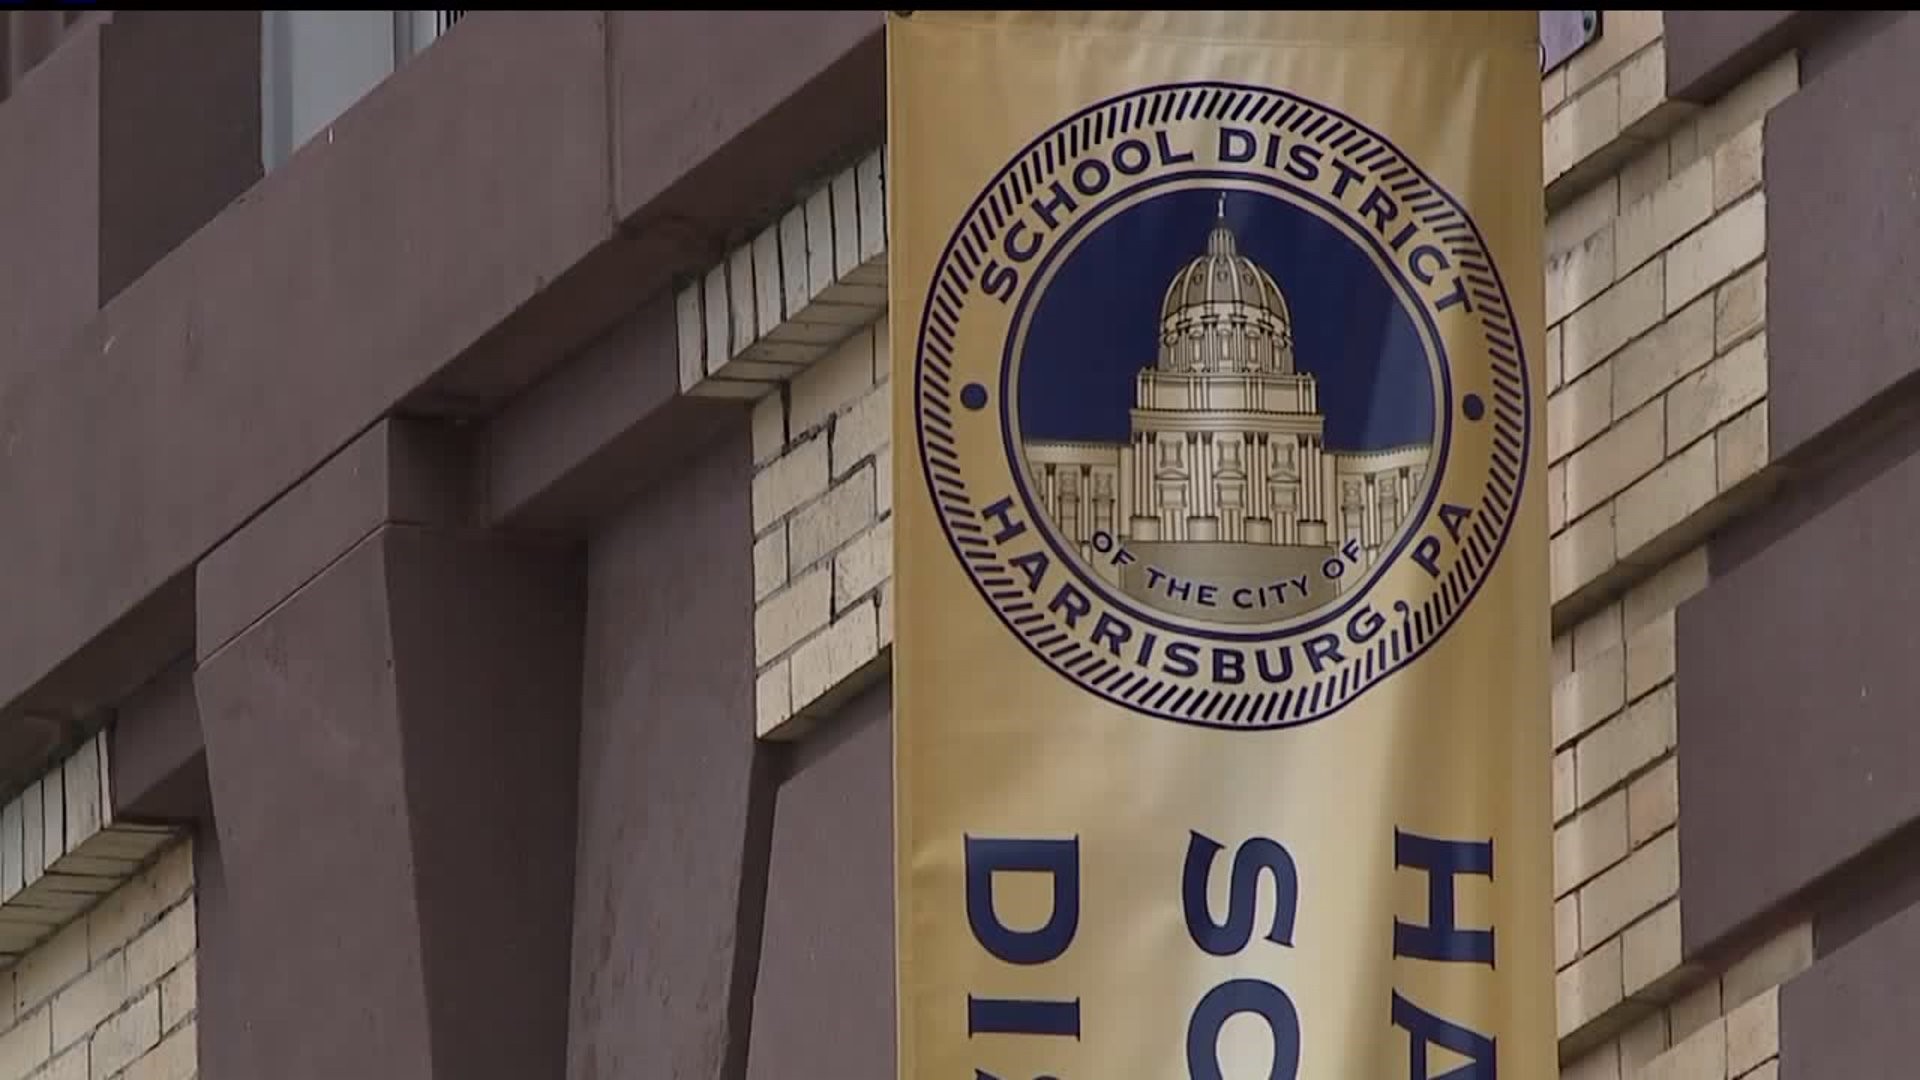 Harrisburg School District receiver announces recovery plan, eliminating a dozen administrative positions